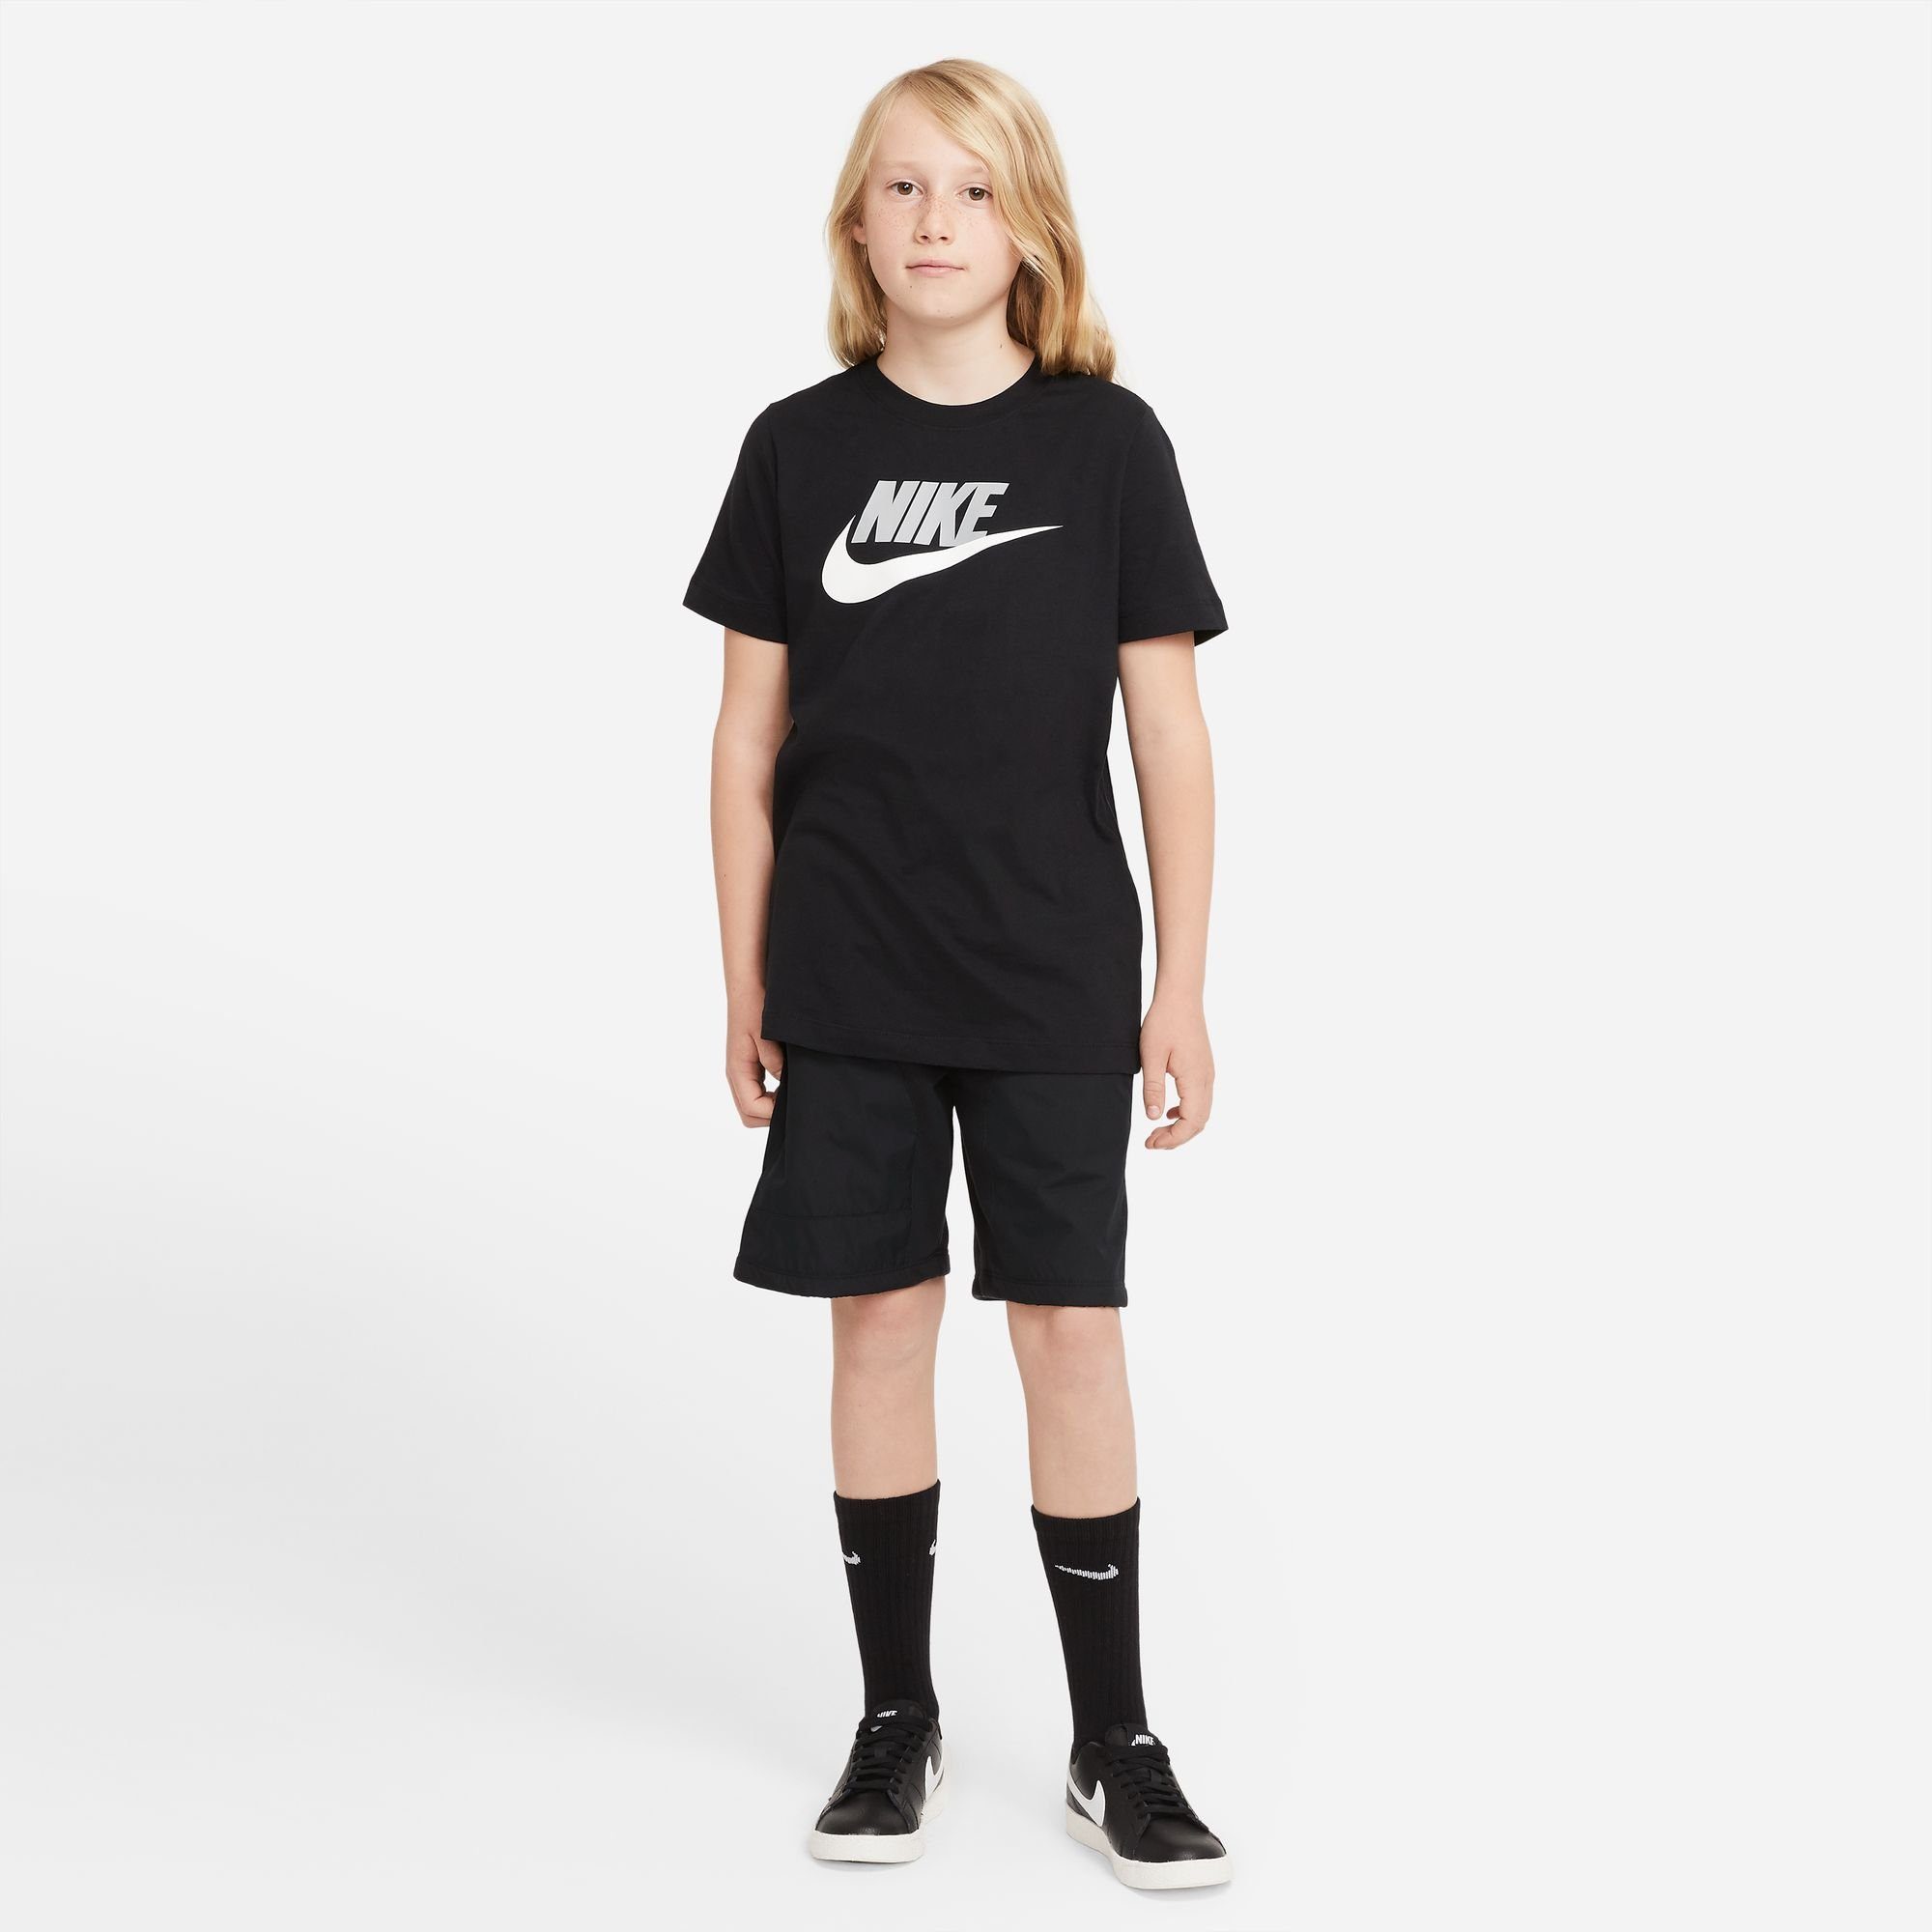 BIG T-Shirt T-SHIRT Sportswear Nike KIDS' schwarz-grau-weiß COTTON